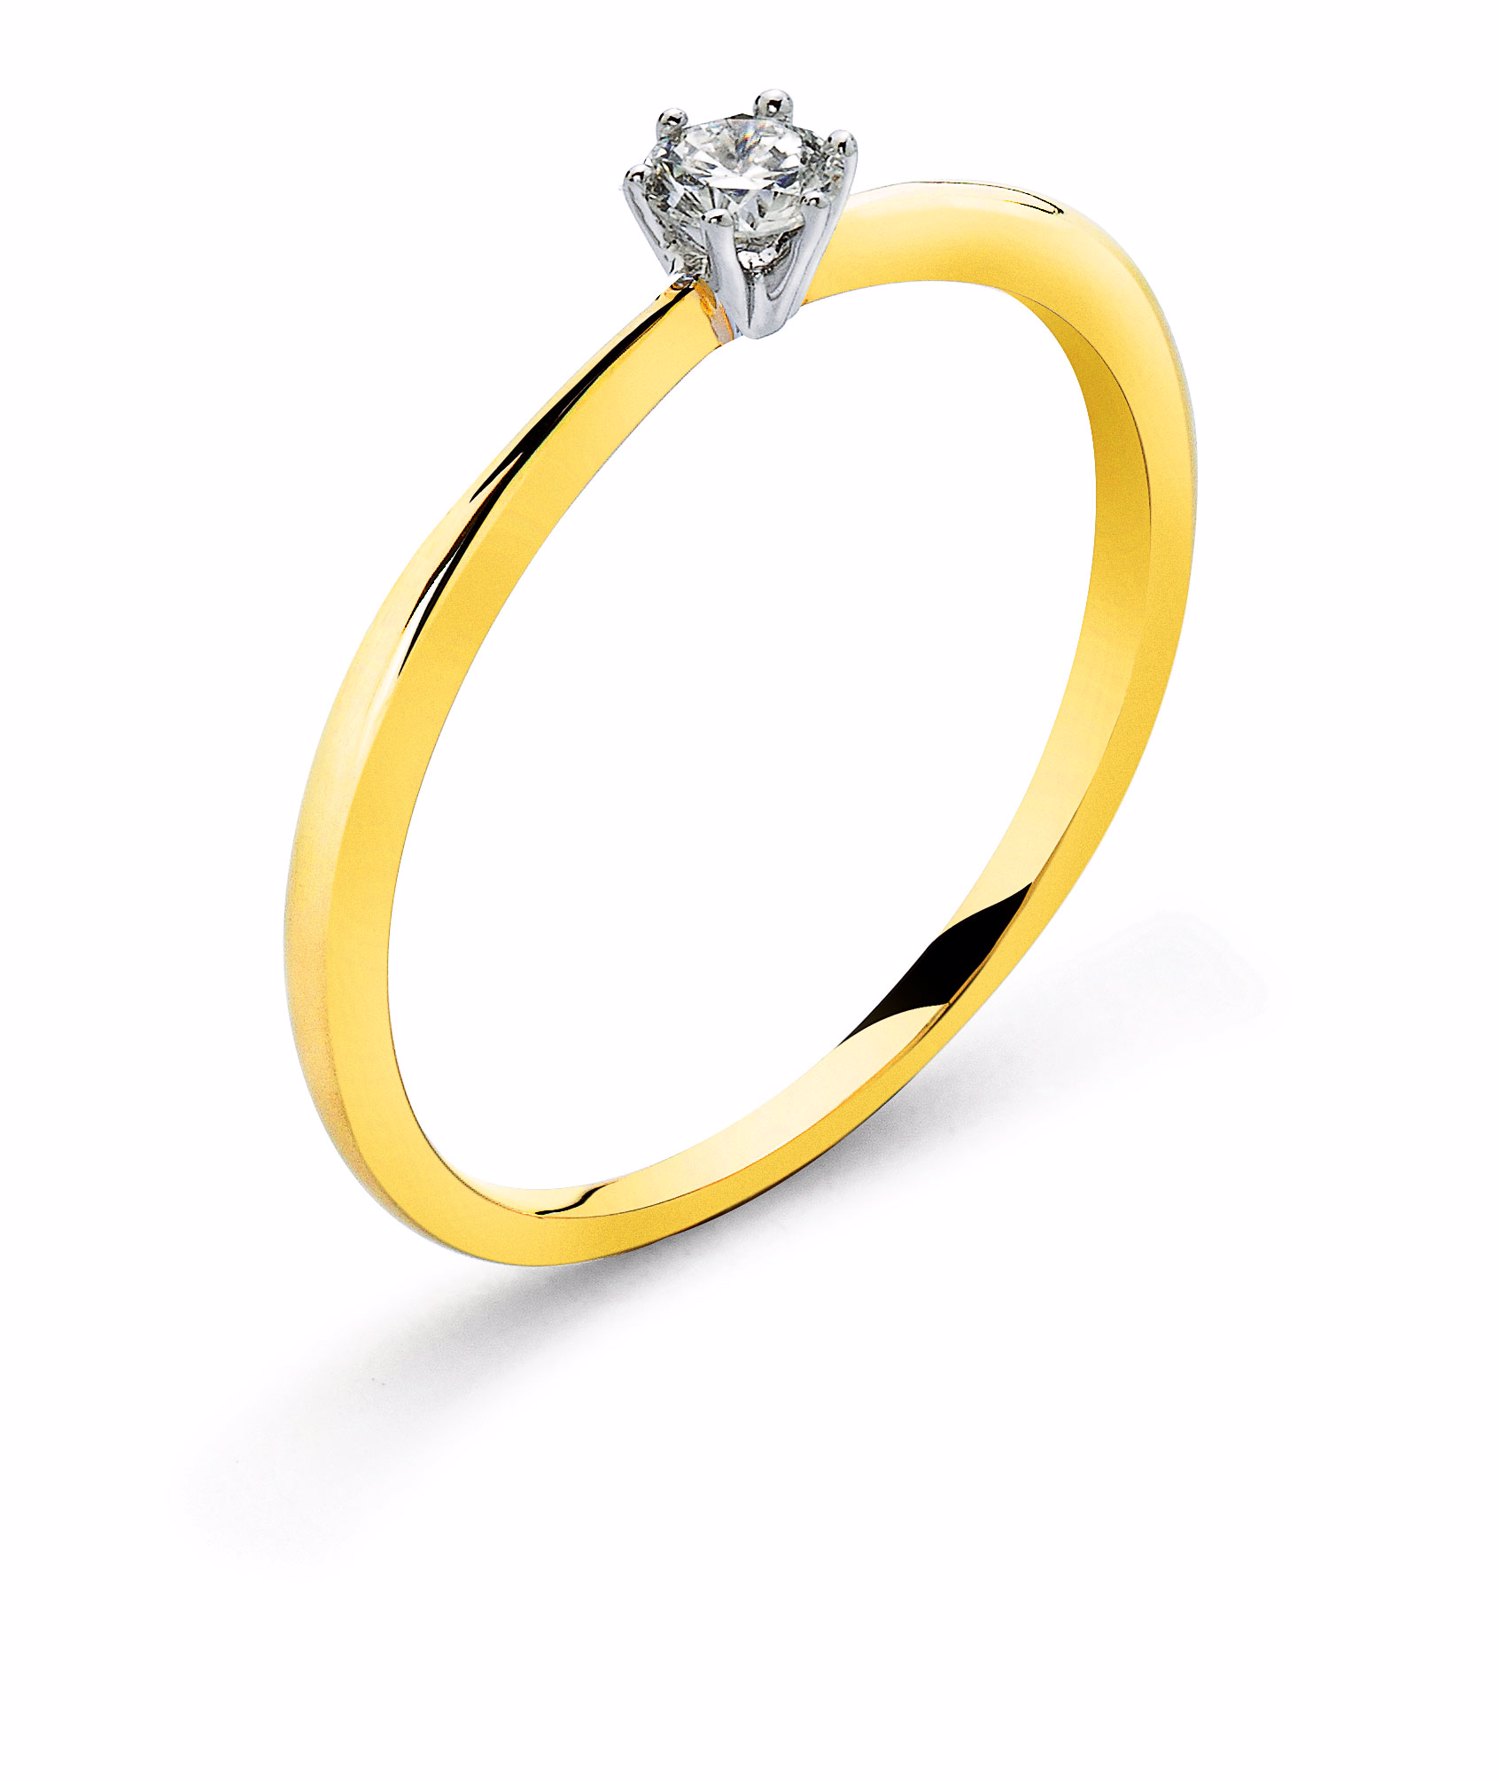 AURONOS Prestige Solitaire Ring Yellow Gold 18K, Setting White Gold Diamond 0.10ct